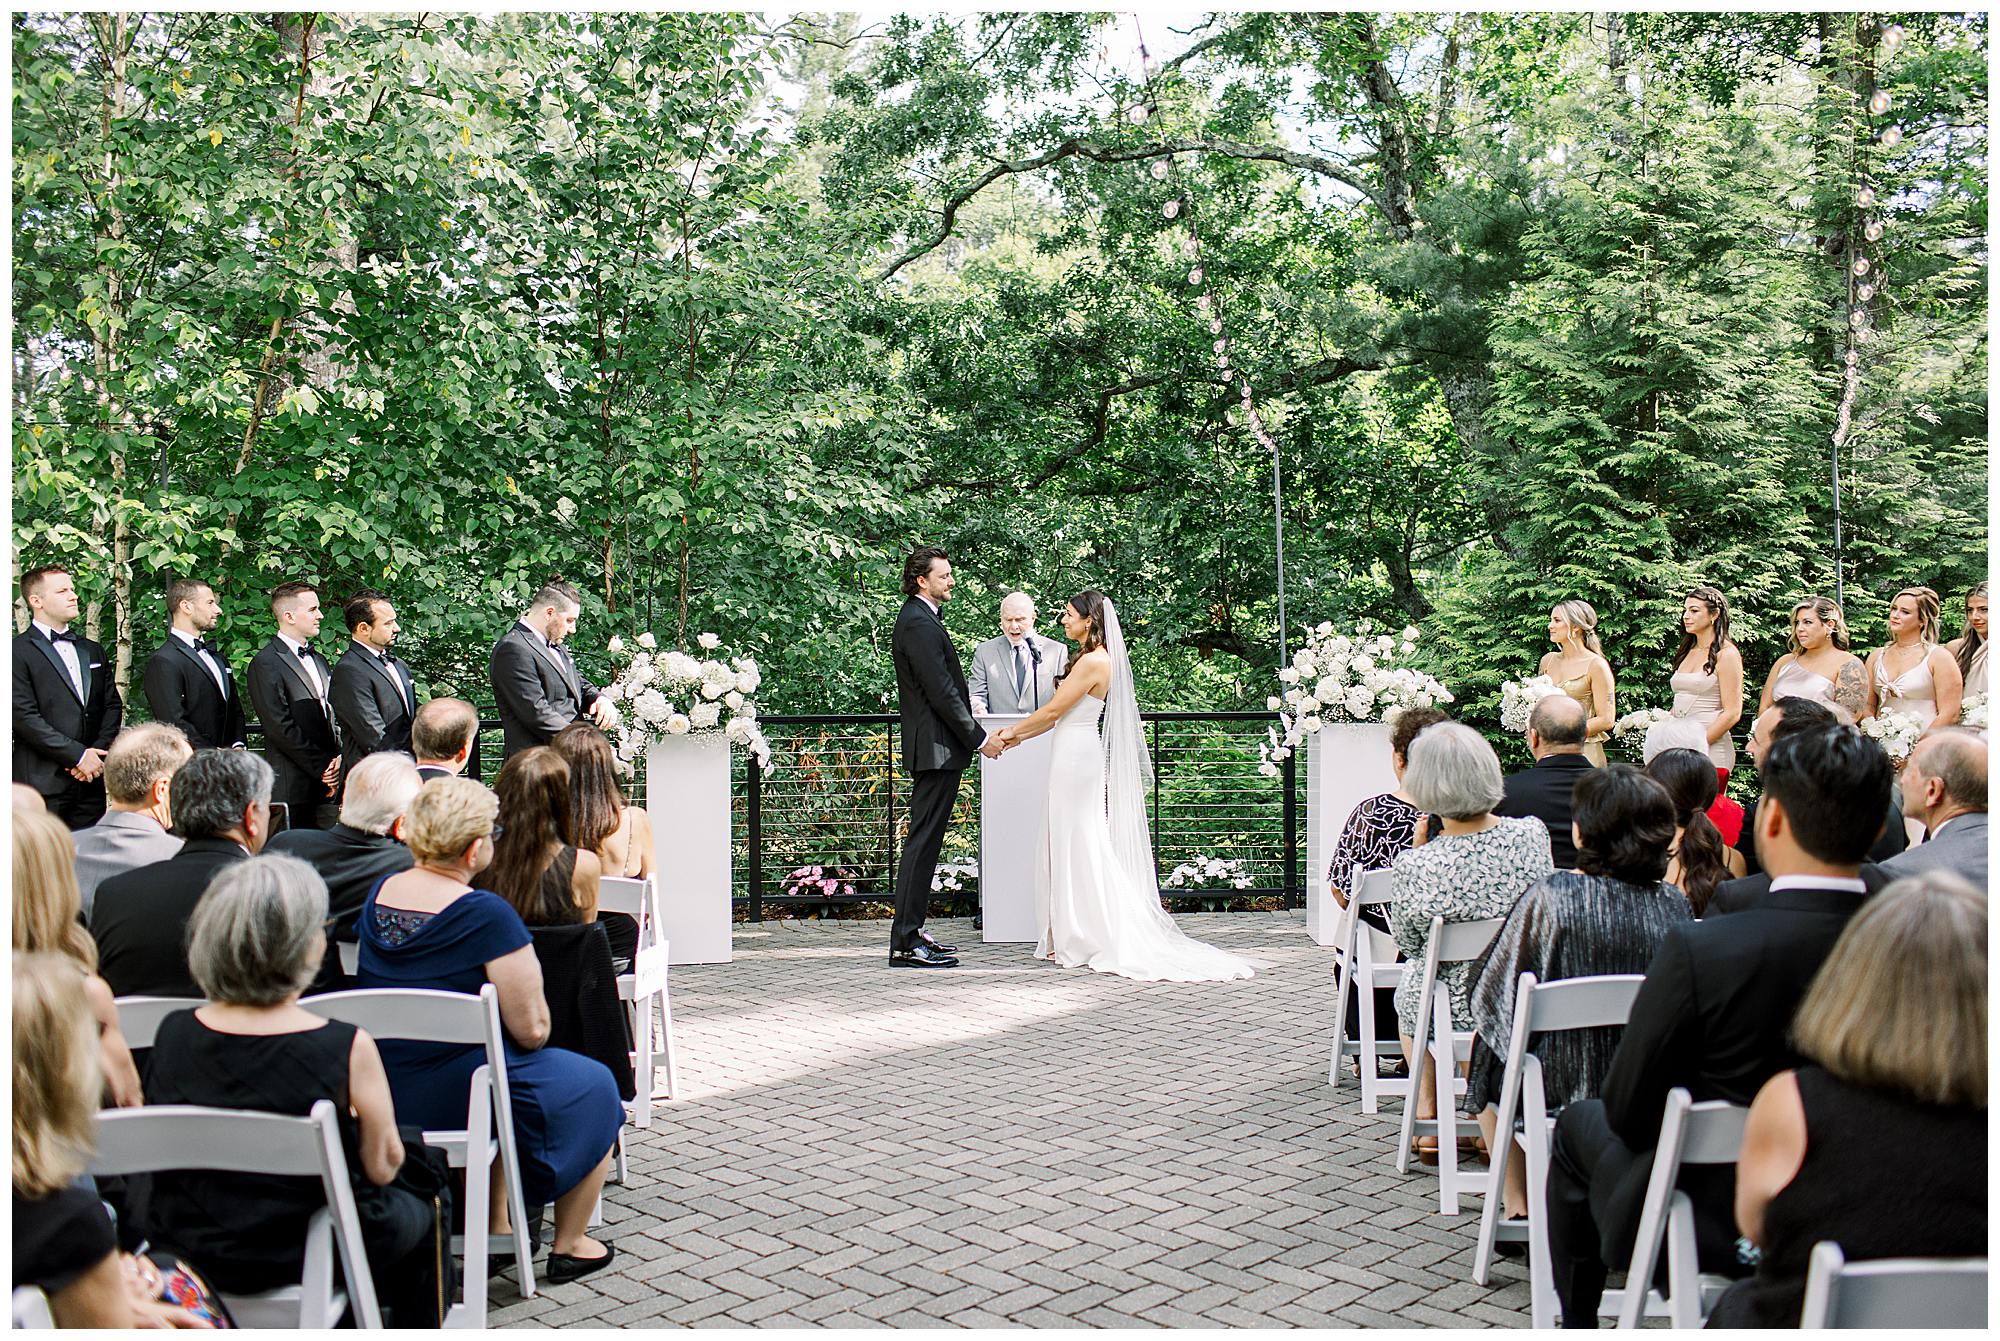 An Elegant & Sophisticated Lakeview Pavilion Wedding